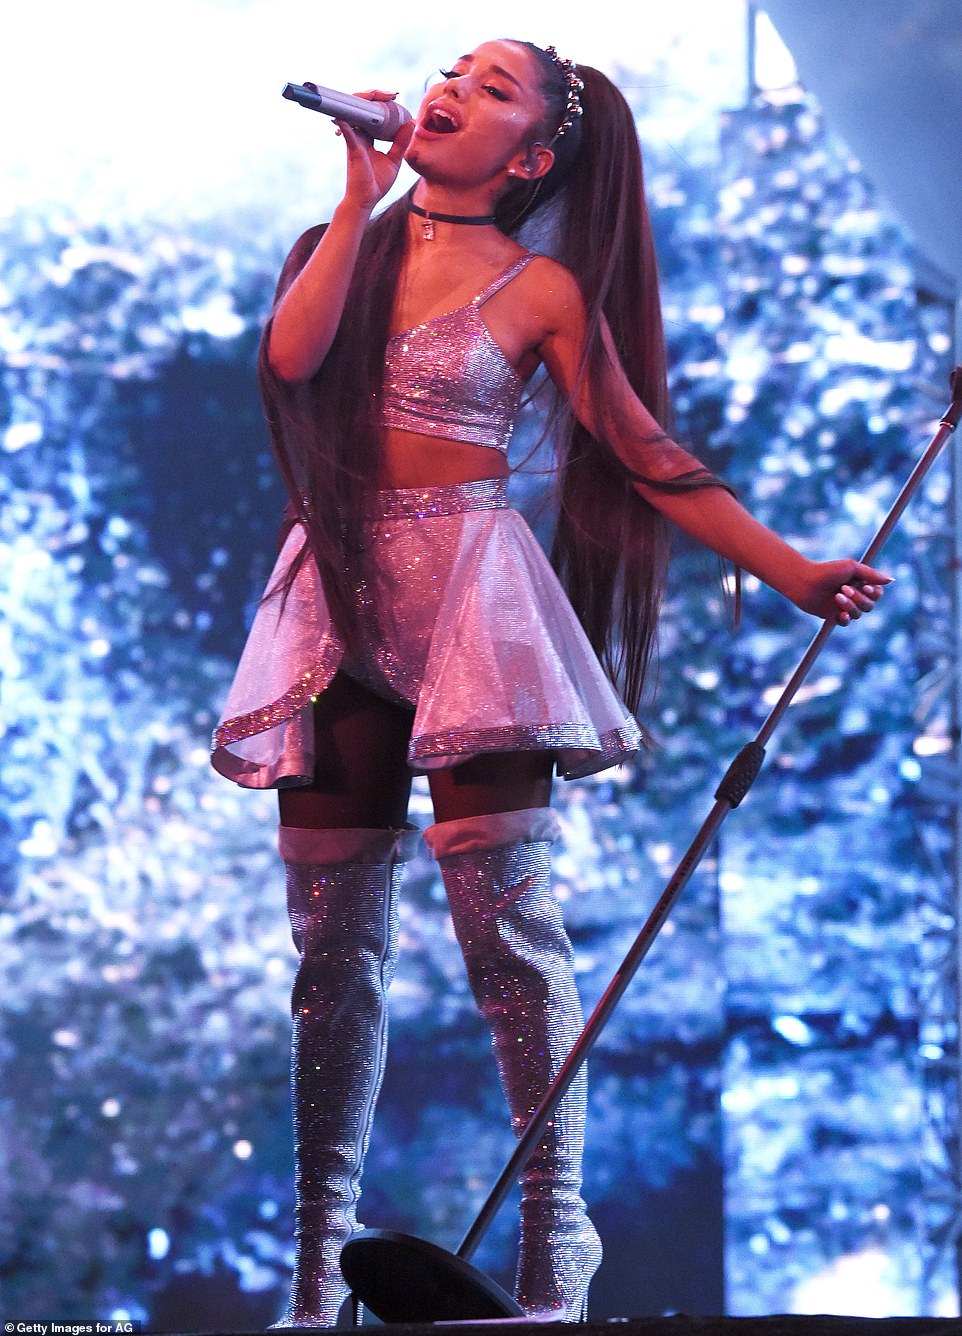 phong cách thời trang coachella 2019 Ariana Grande 7